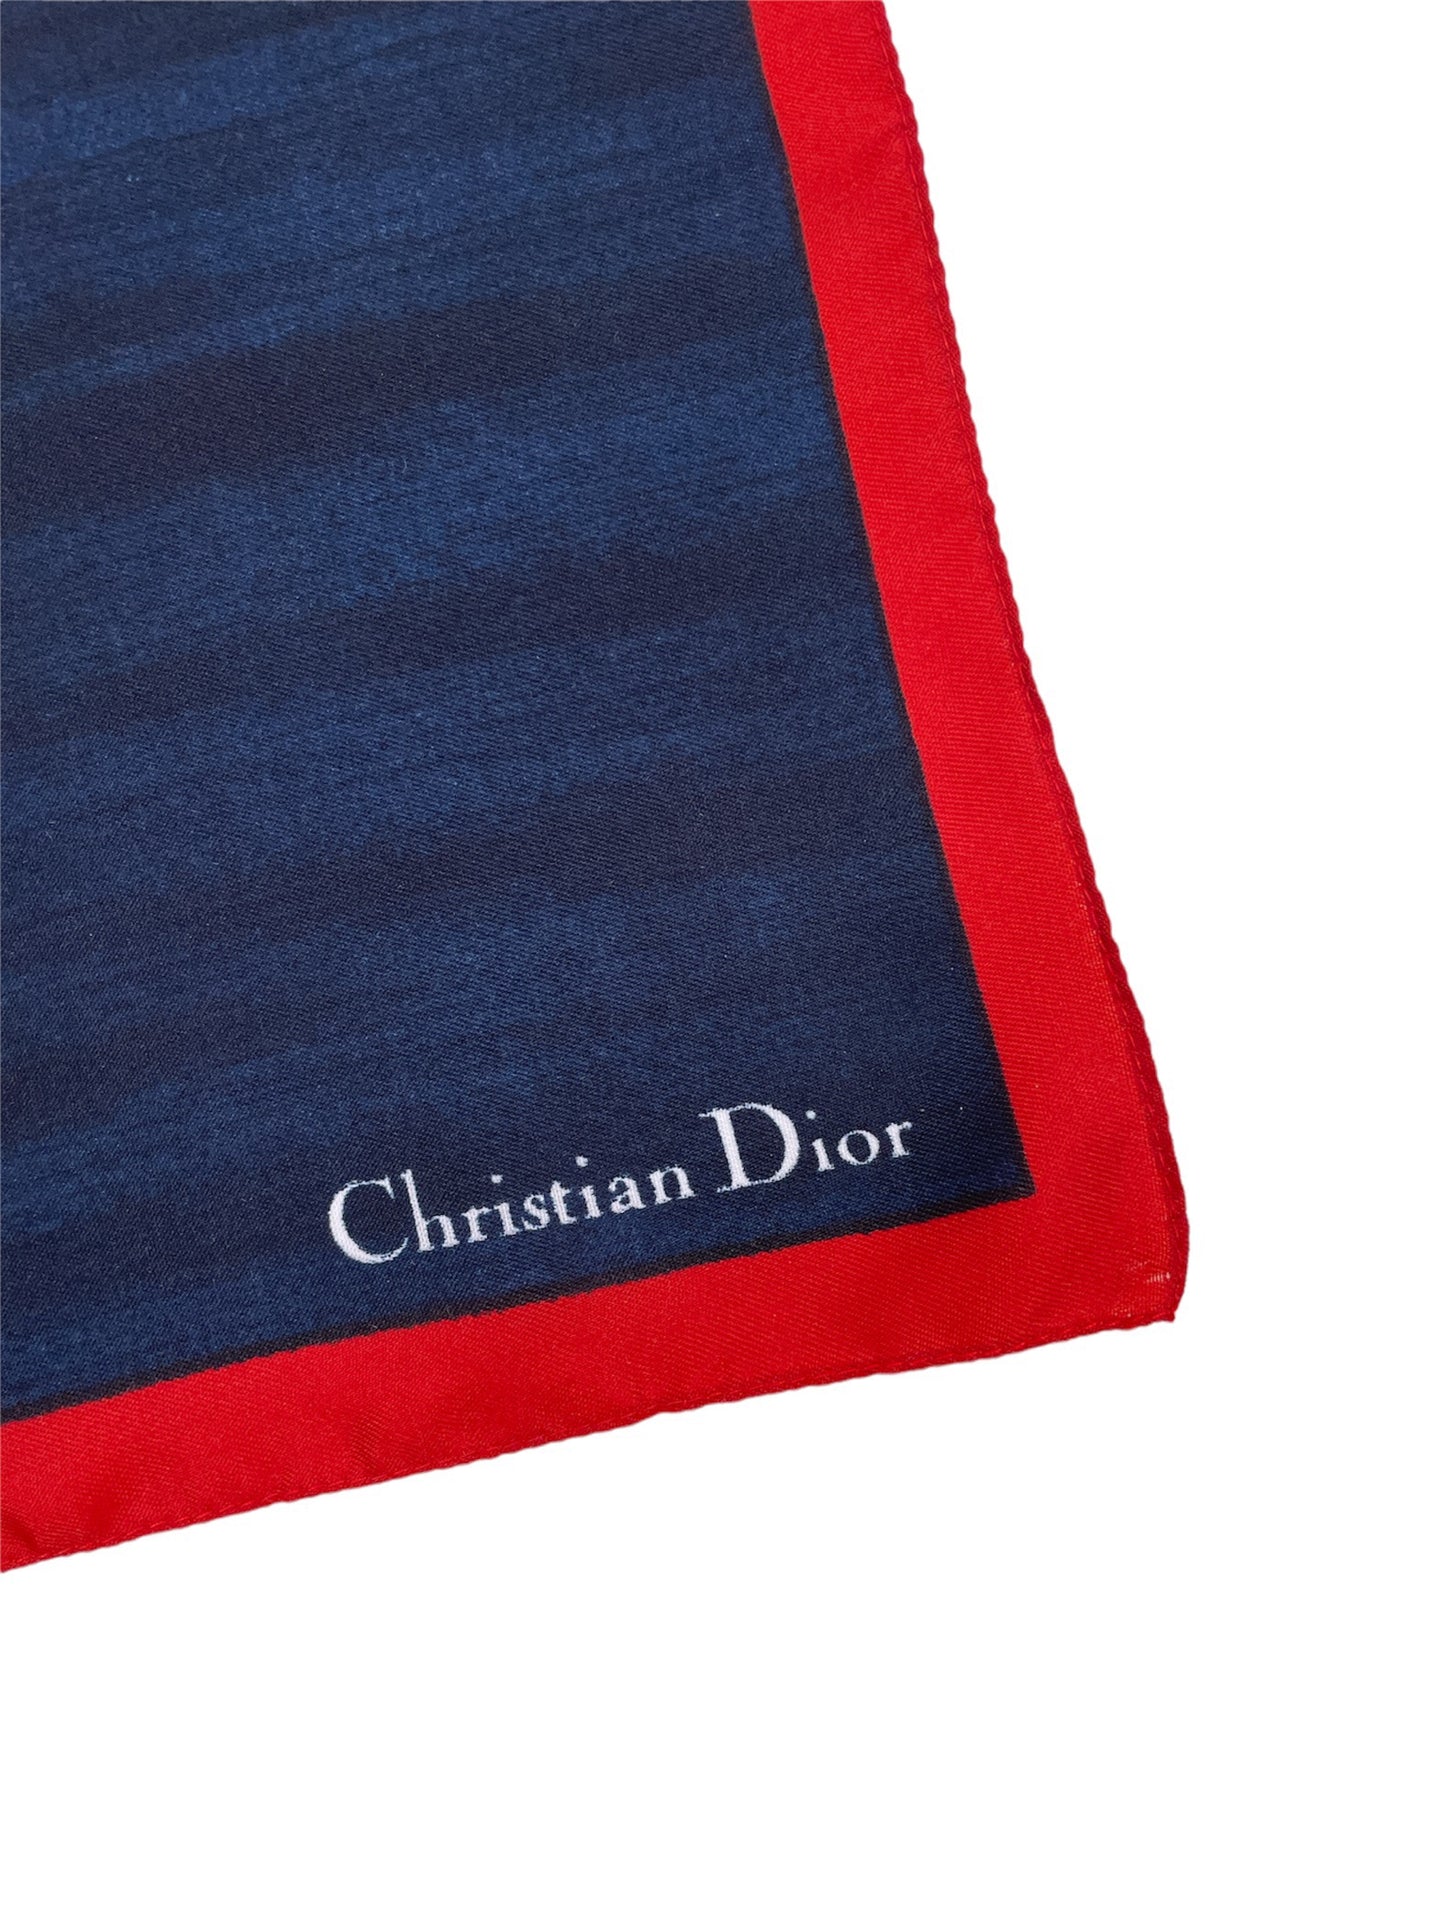 Christian Dior Fahrenheit Scarf